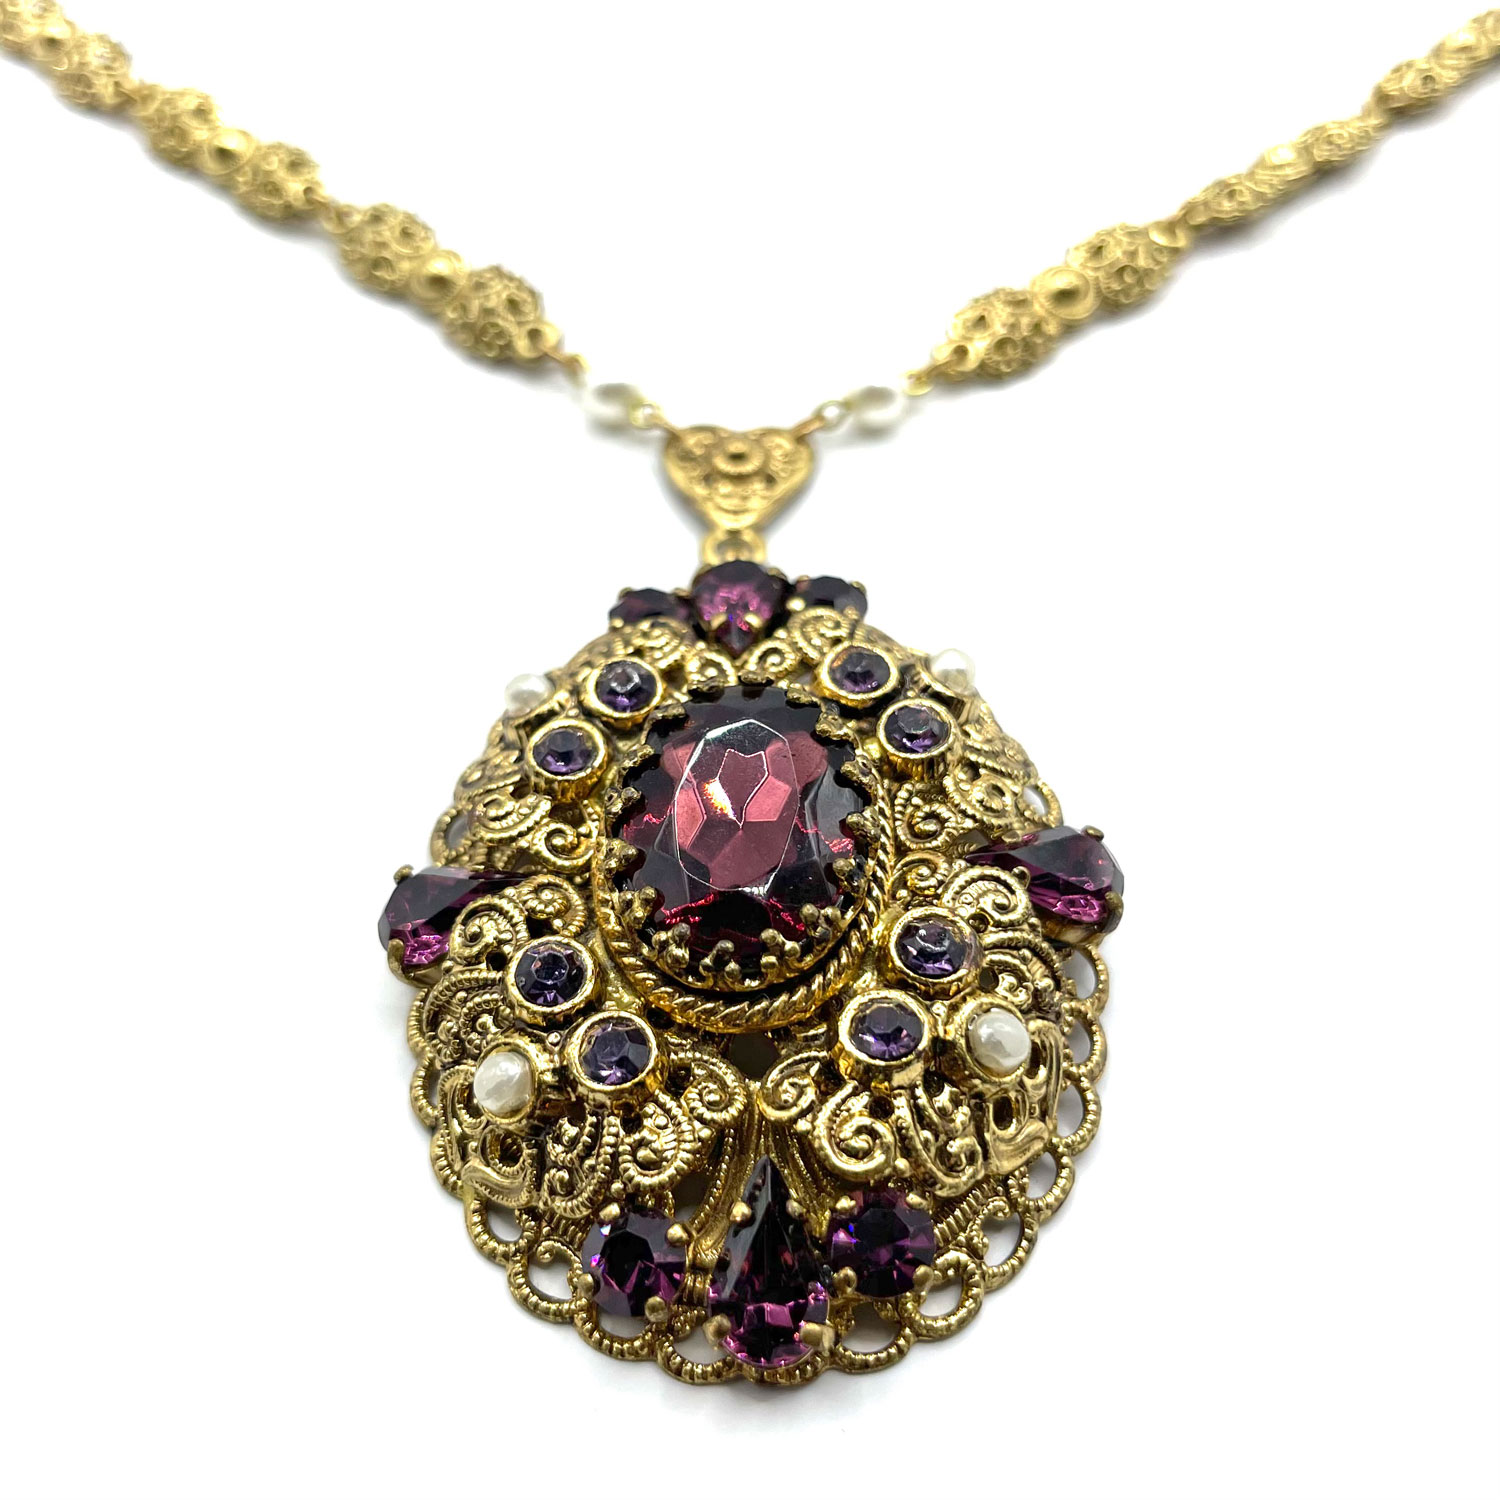 Rhinestone pendant necklace and earring set